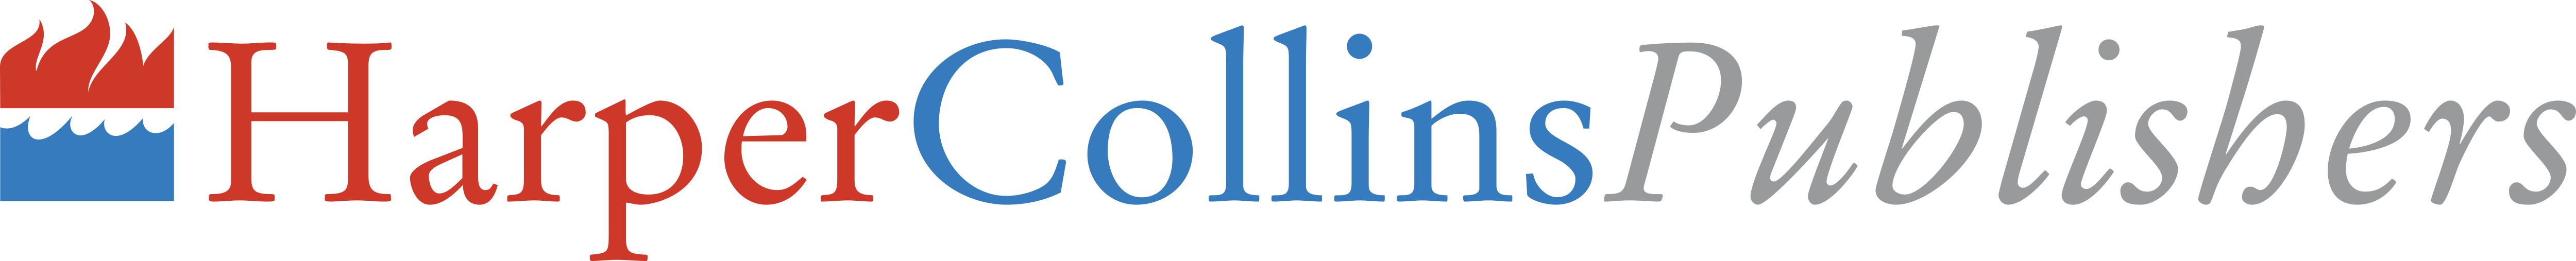 Harpercollins logo